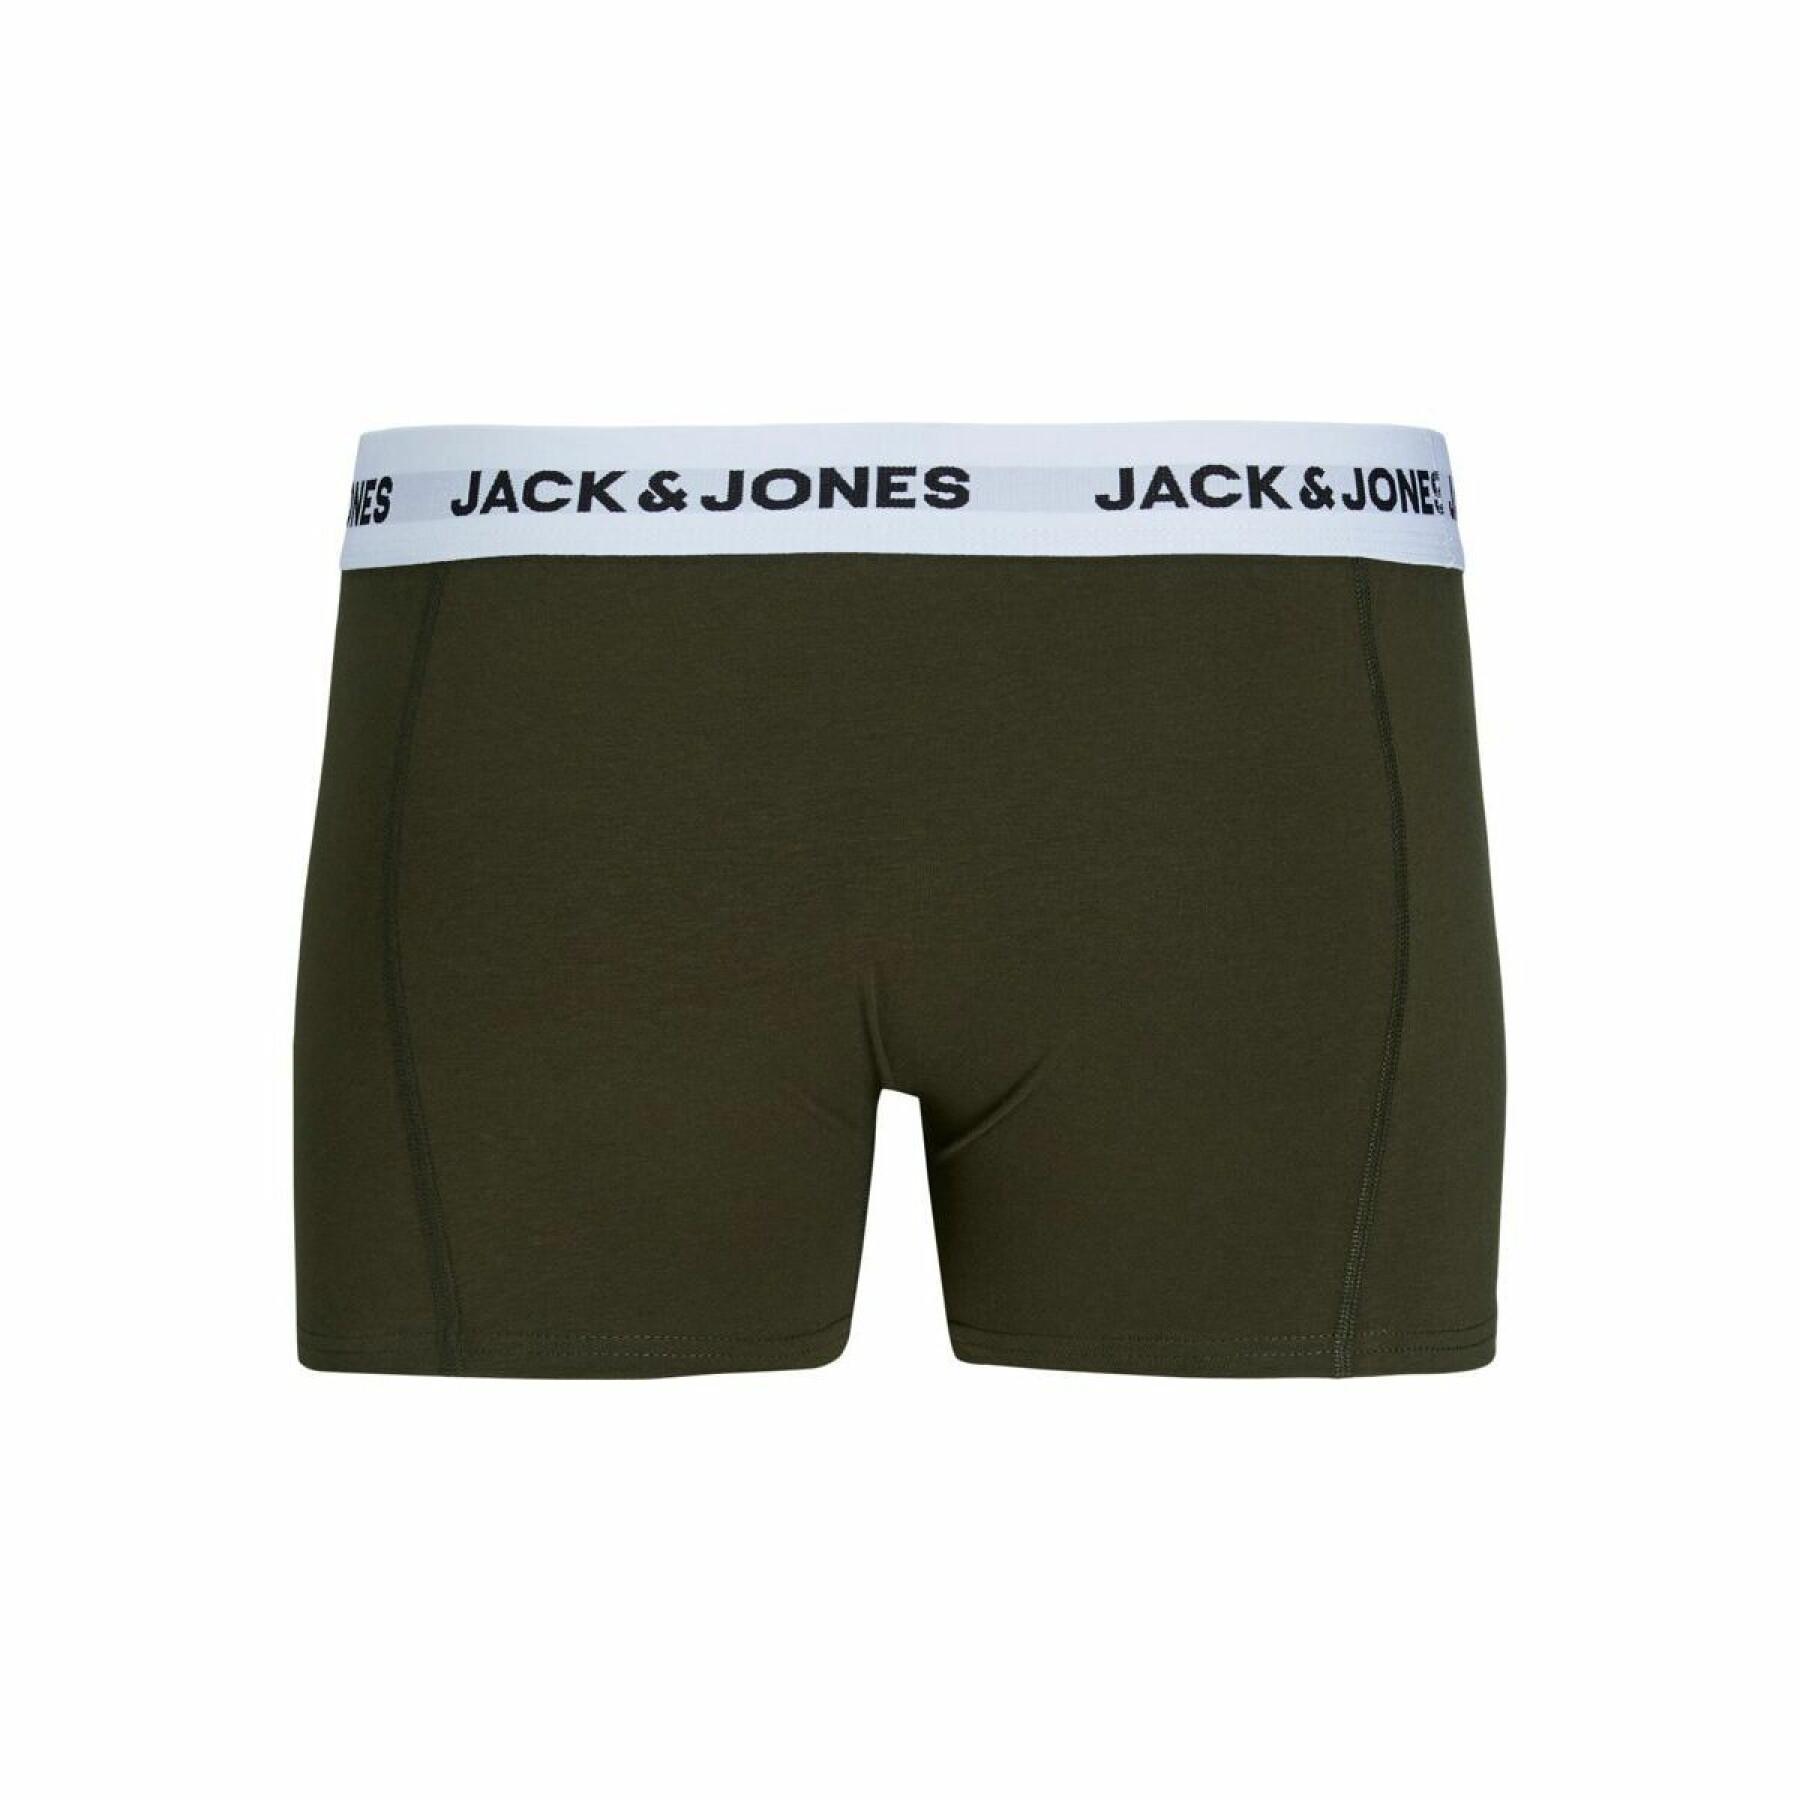 Set van 5 boxers Jack & Jones Basic